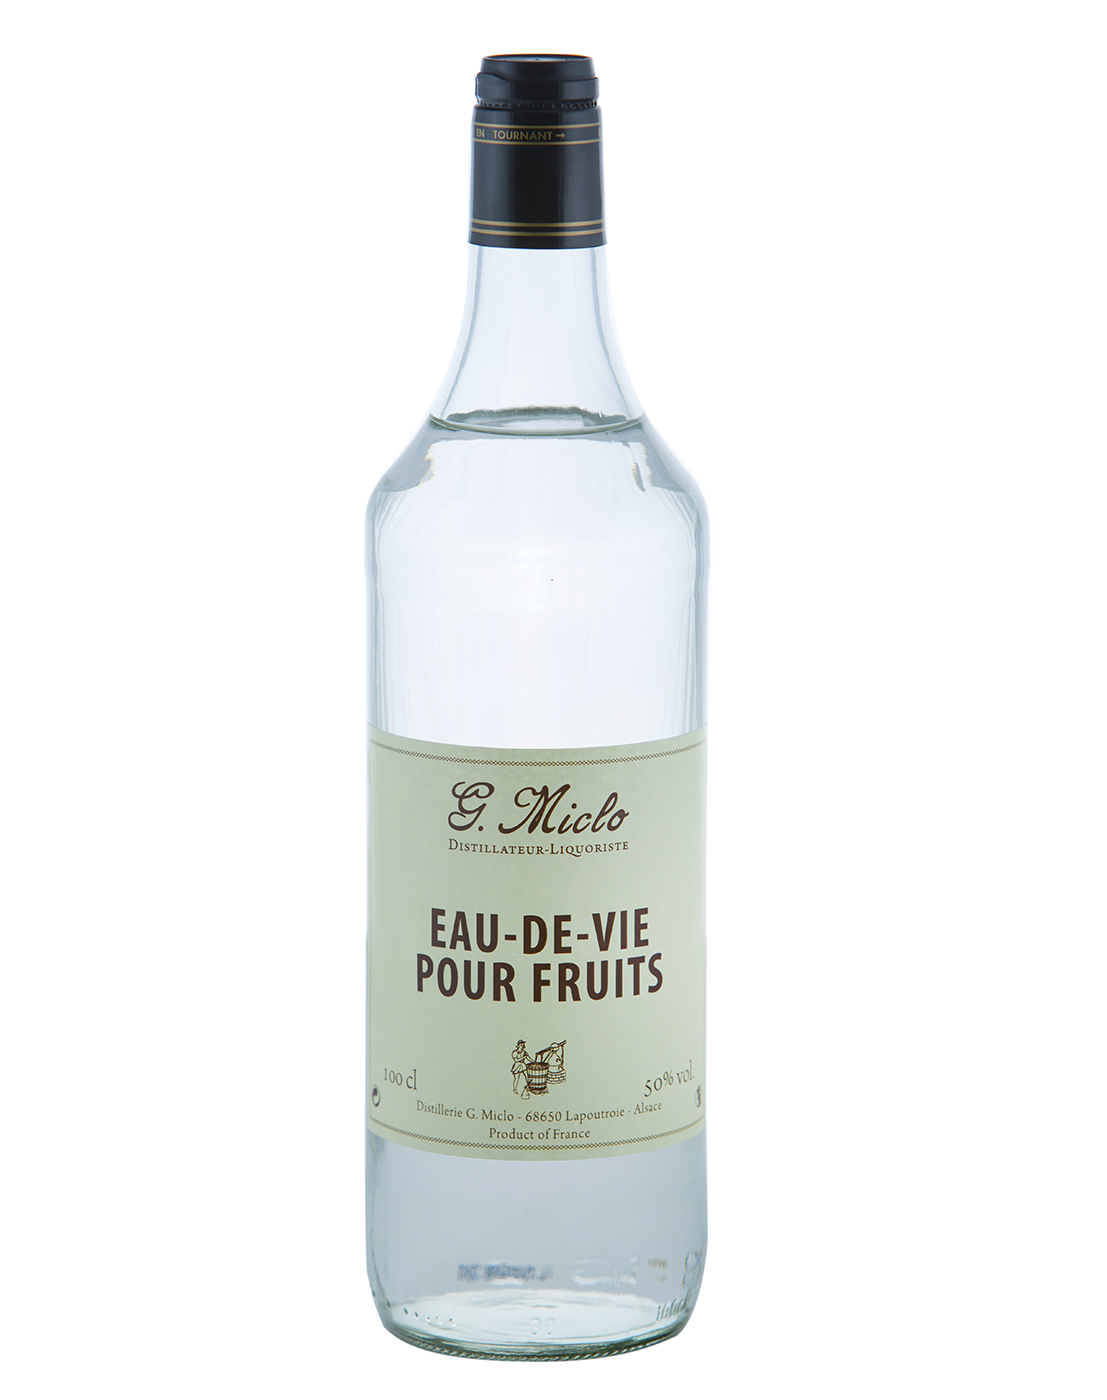 https://www.lavignery.fr/339/distillerie-gmiclo-pour-fruits.jpg